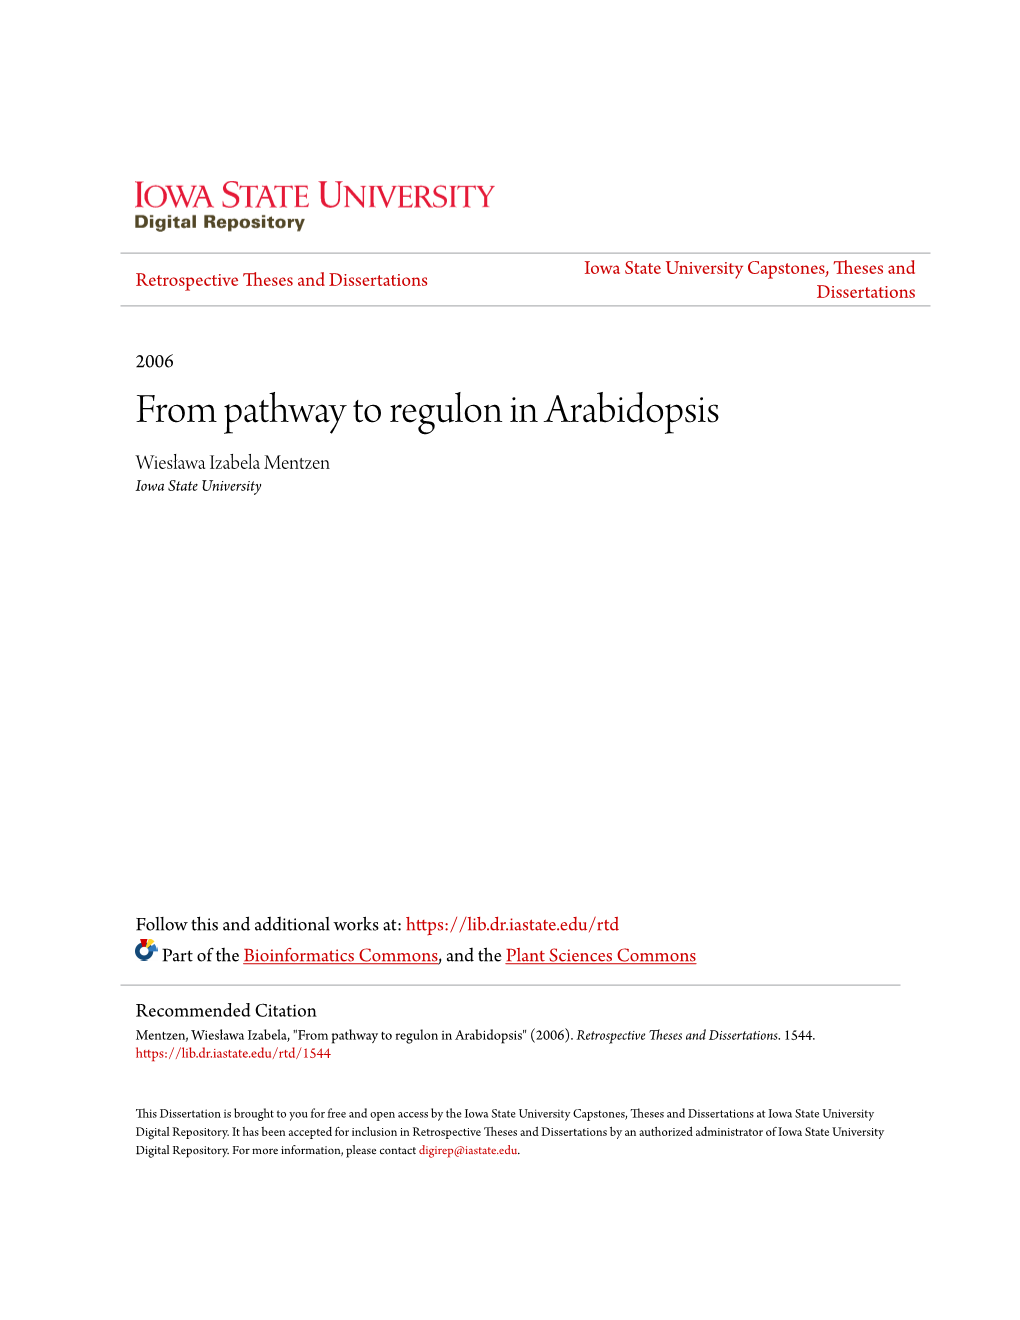 From Pathway to Regulon in Arabidopsis Wiesława Izabela Mentzen Iowa State University